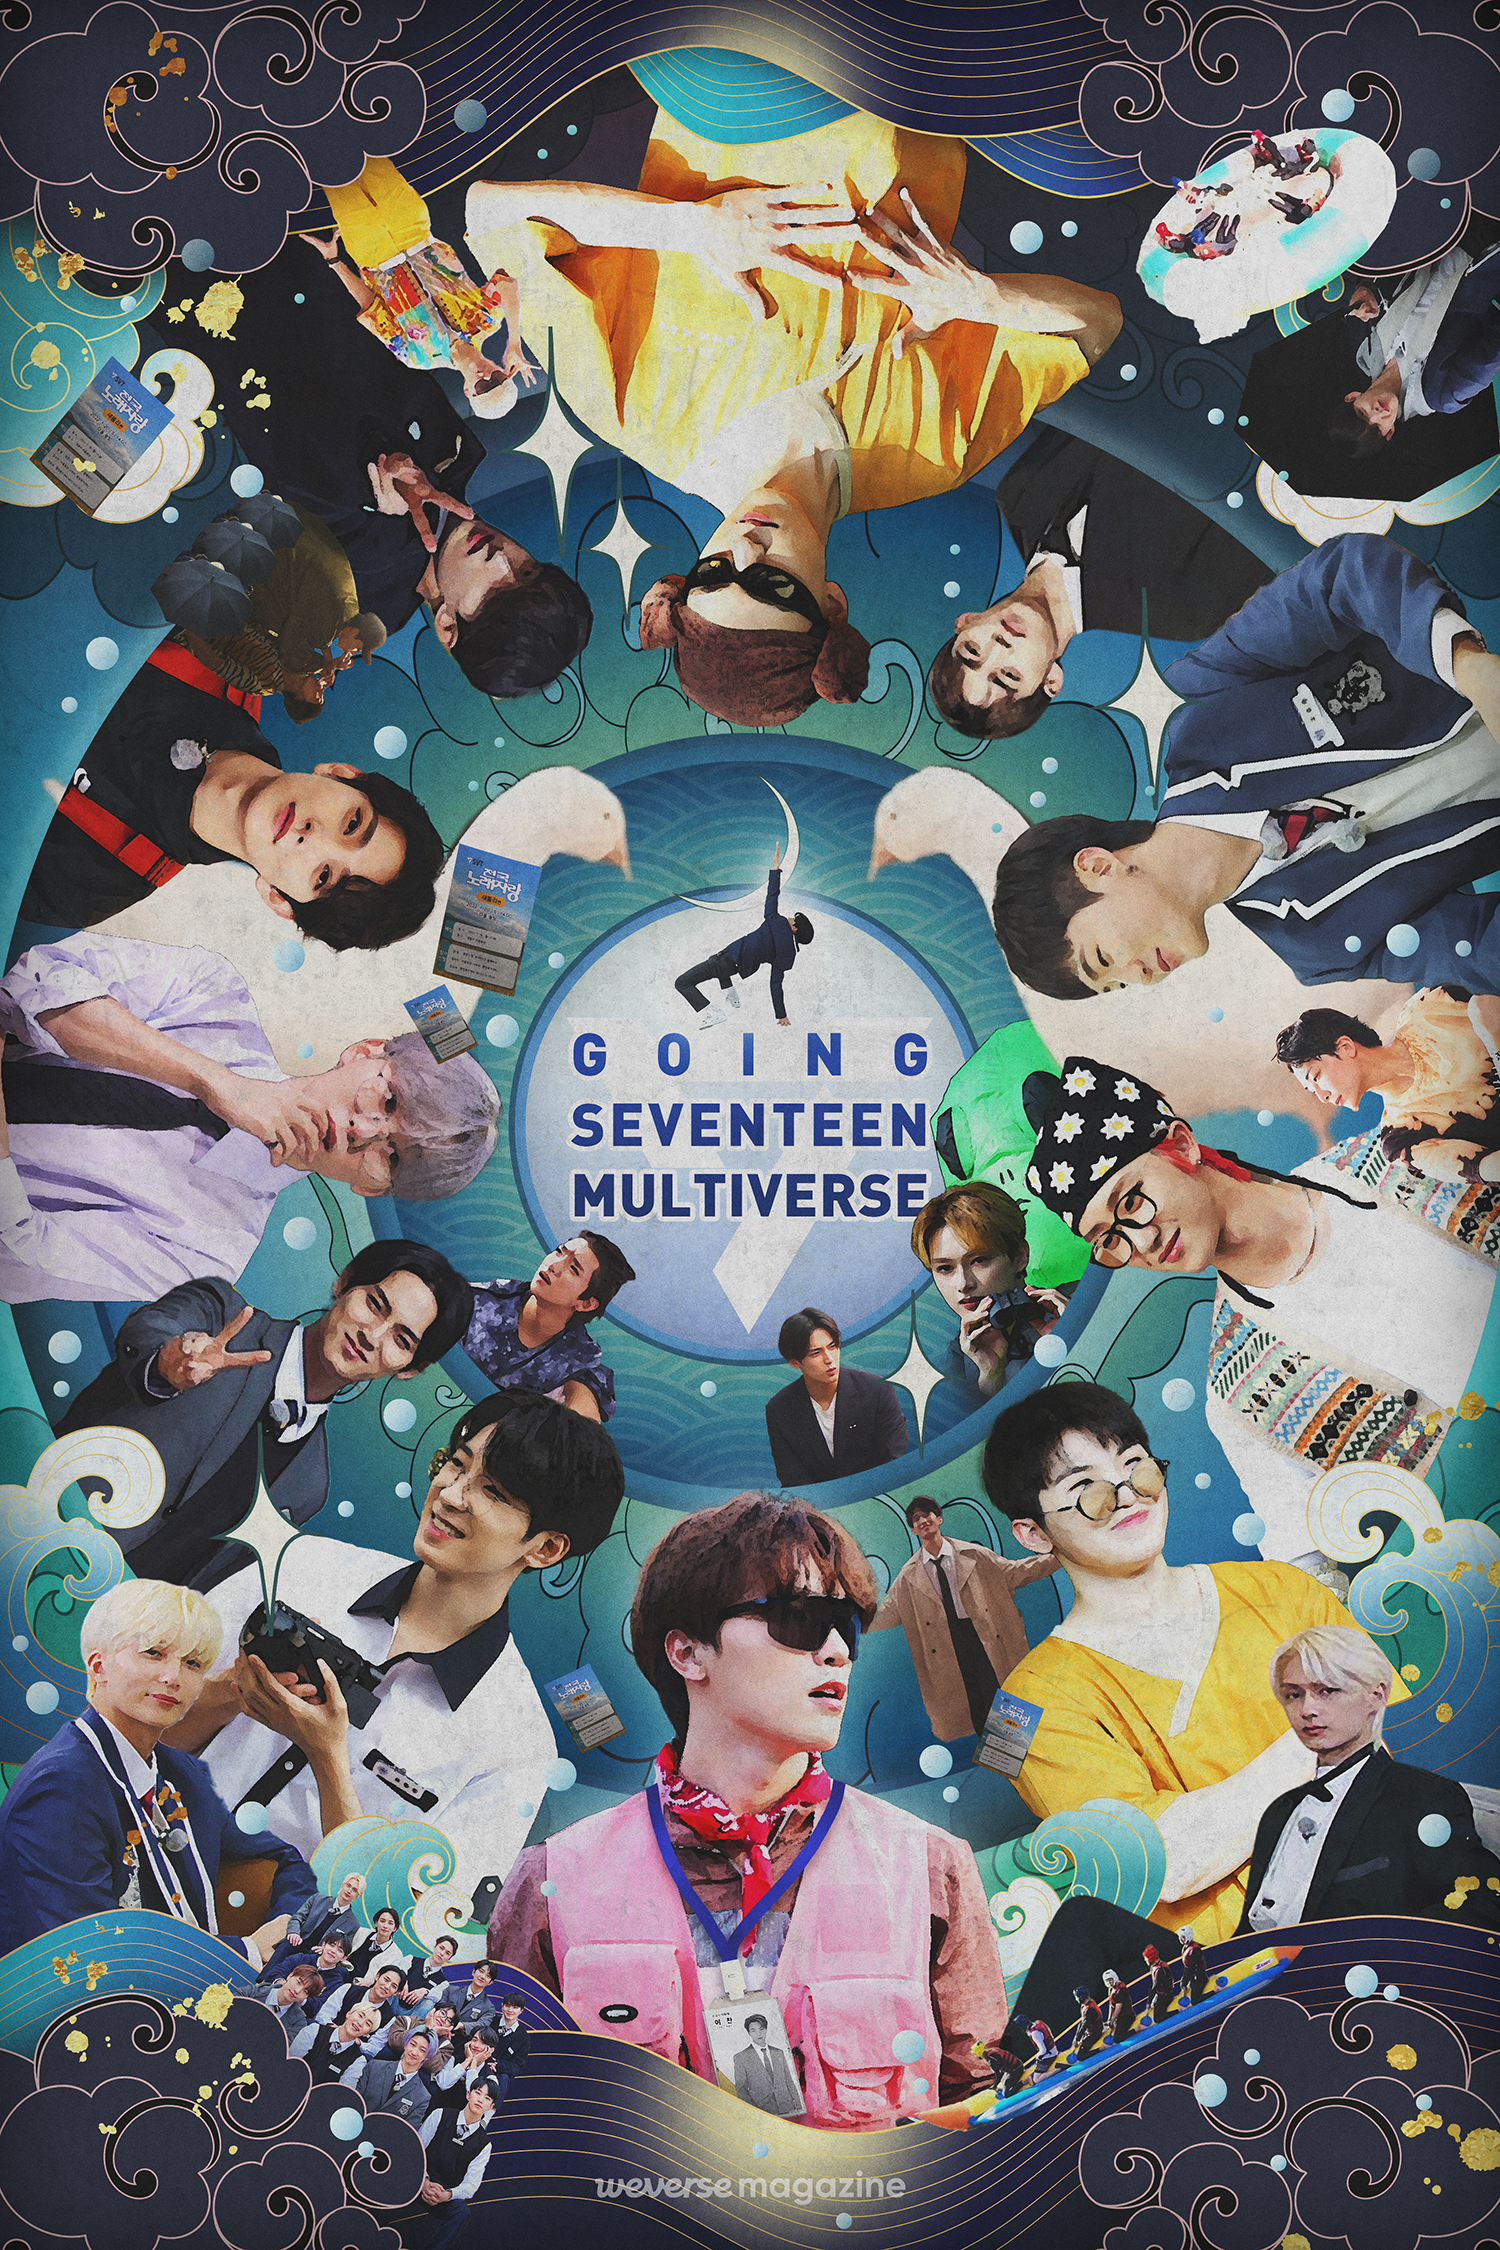 Magazine] The world of GOING SEVENTEEN